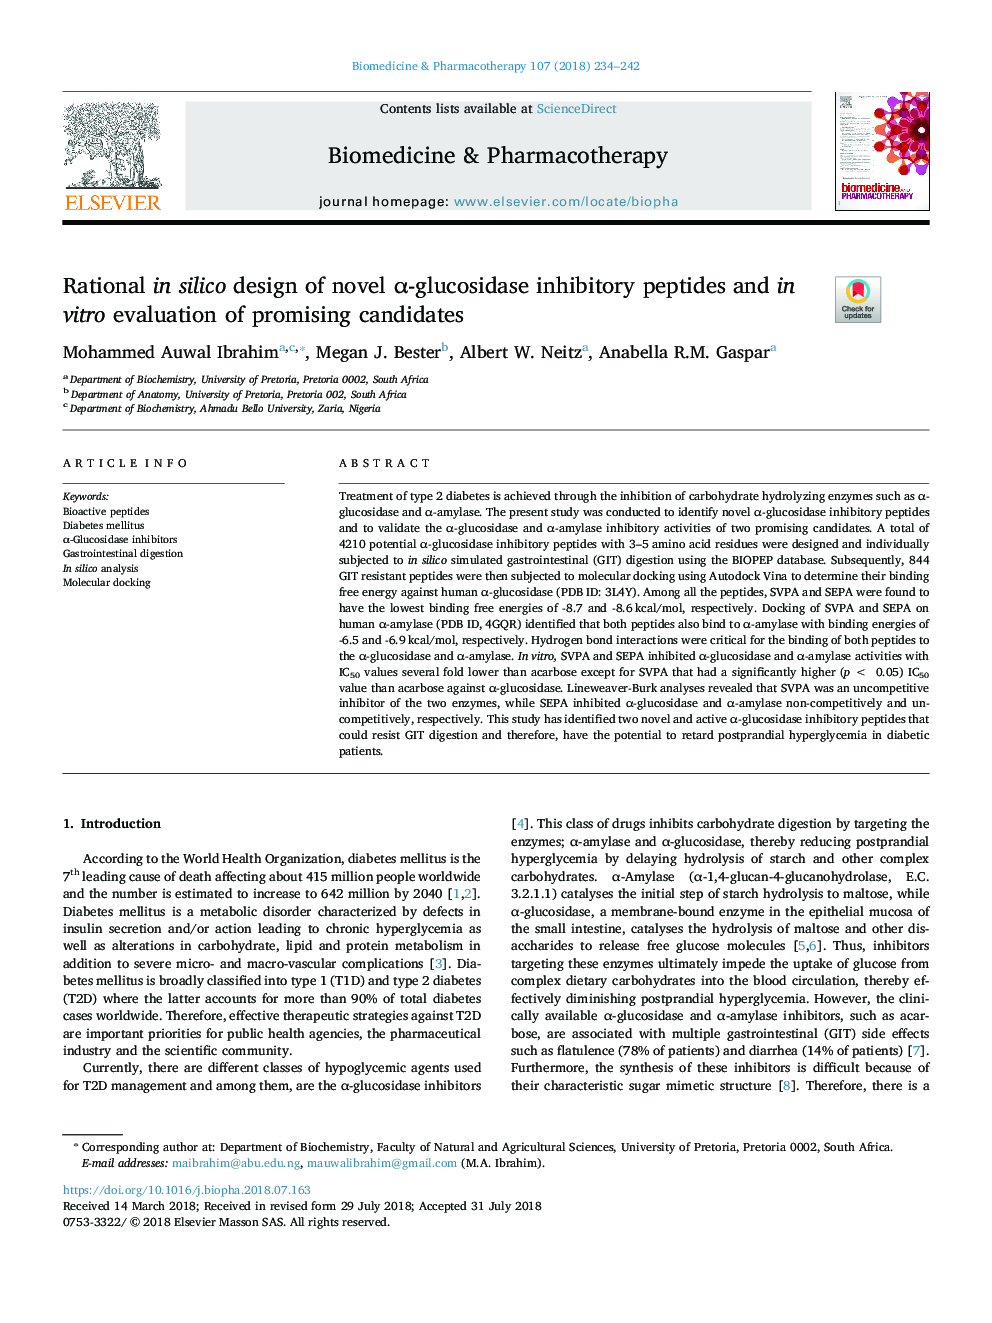 Rational in silico design of novel Î±-glucosidase inhibitory peptides and in vitro evaluation of promising candidates